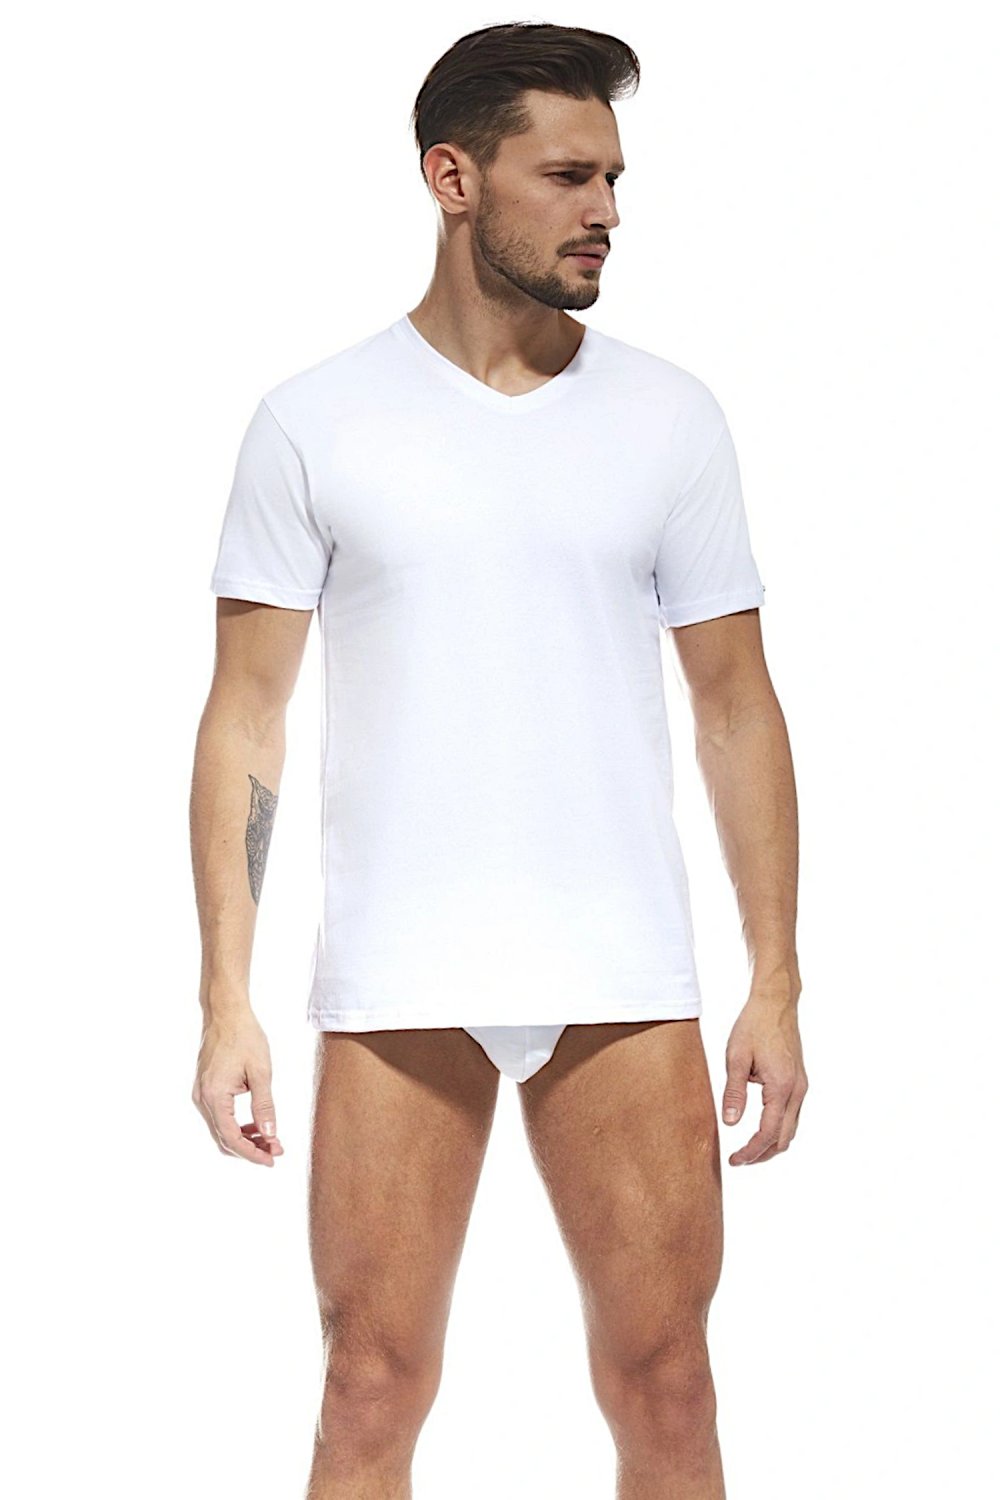 E-shop Pánske tričko 201 Authentic new biała